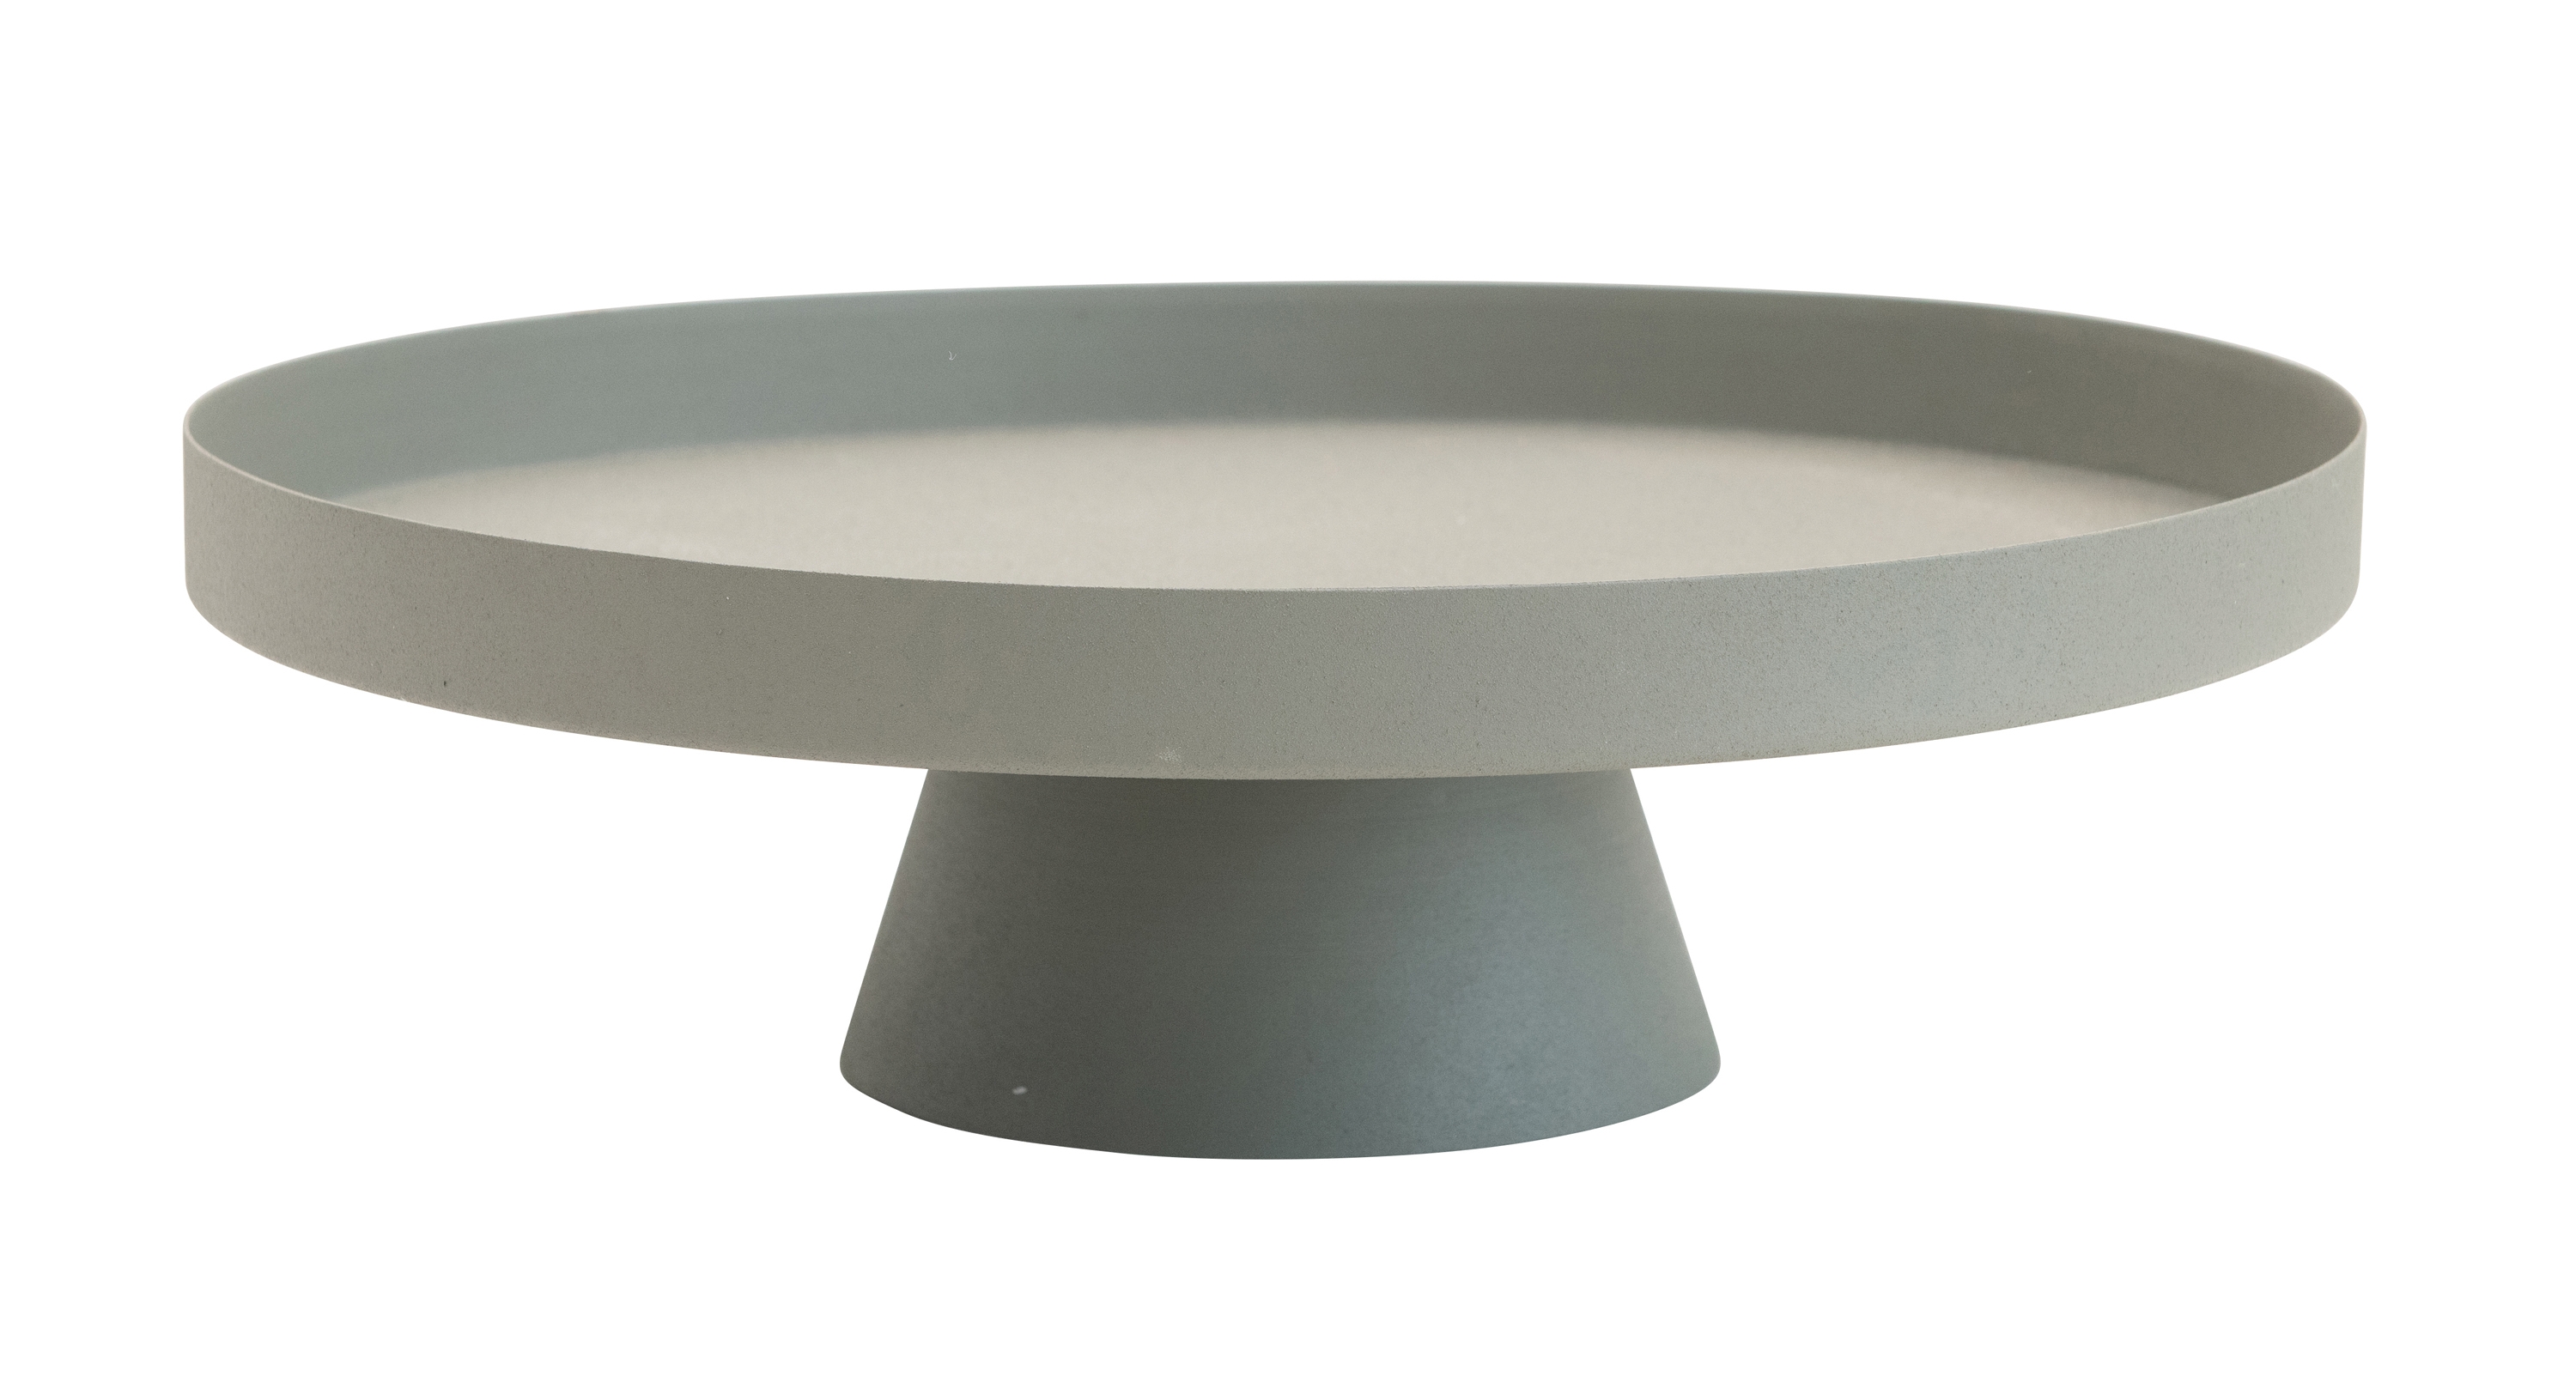 Decorative Round Textured Metal Tray with Pedestal Base, Sage - Image 0